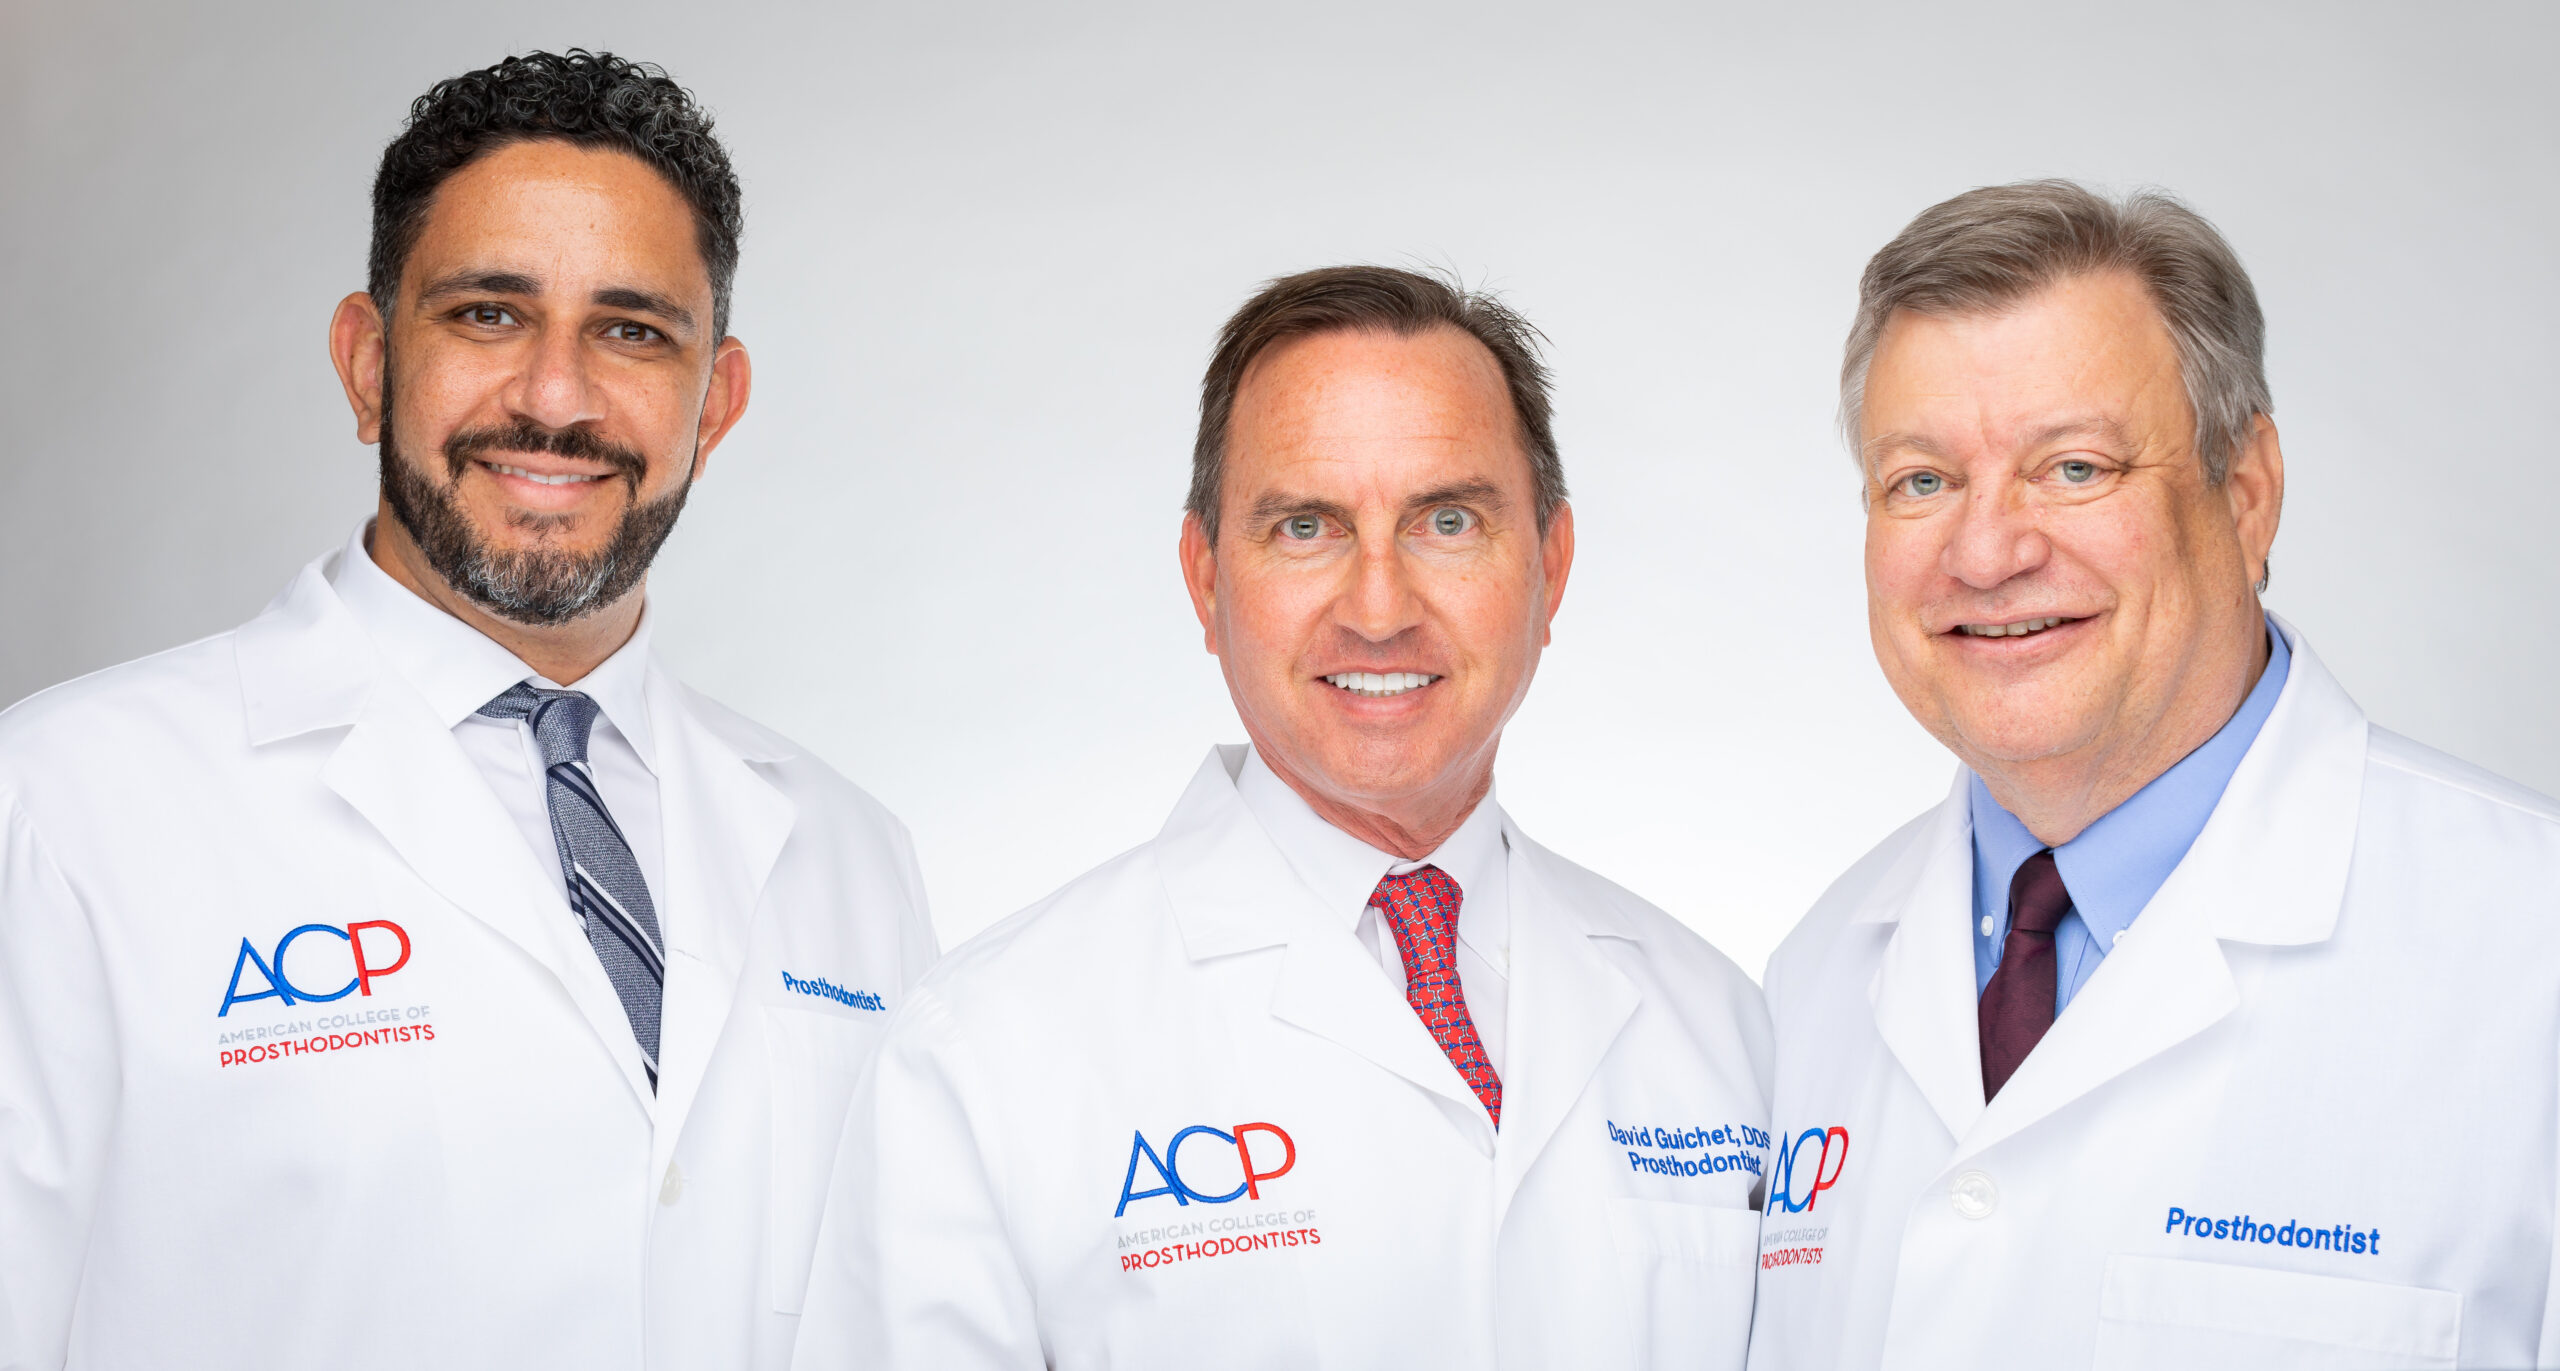 Med3 Image of Best Prosthodontics Doctors in Orange, CA